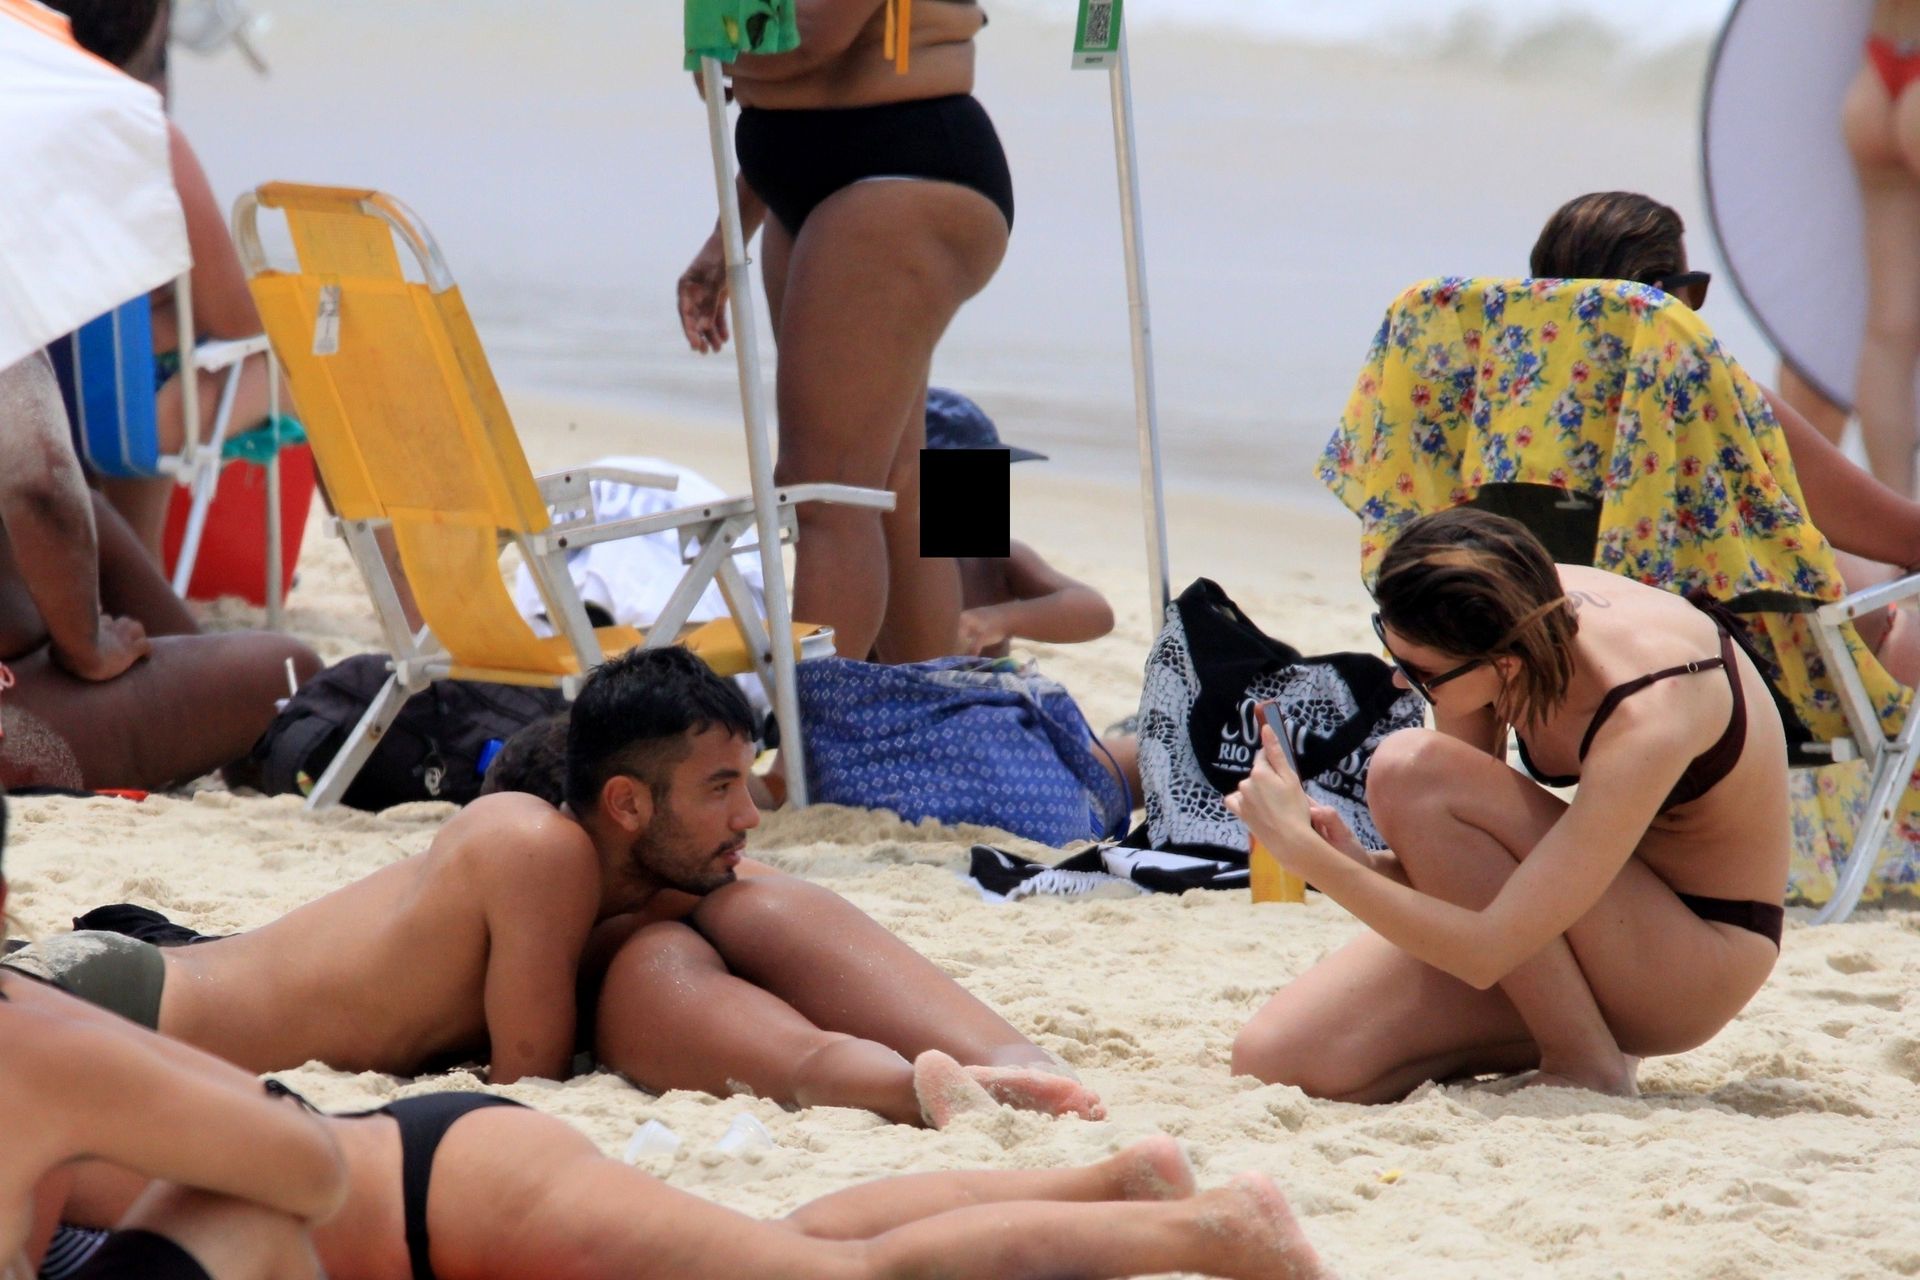 Sexy Tina Kunakey Enjoys Her Vacation In Rio De Janeiro 0053